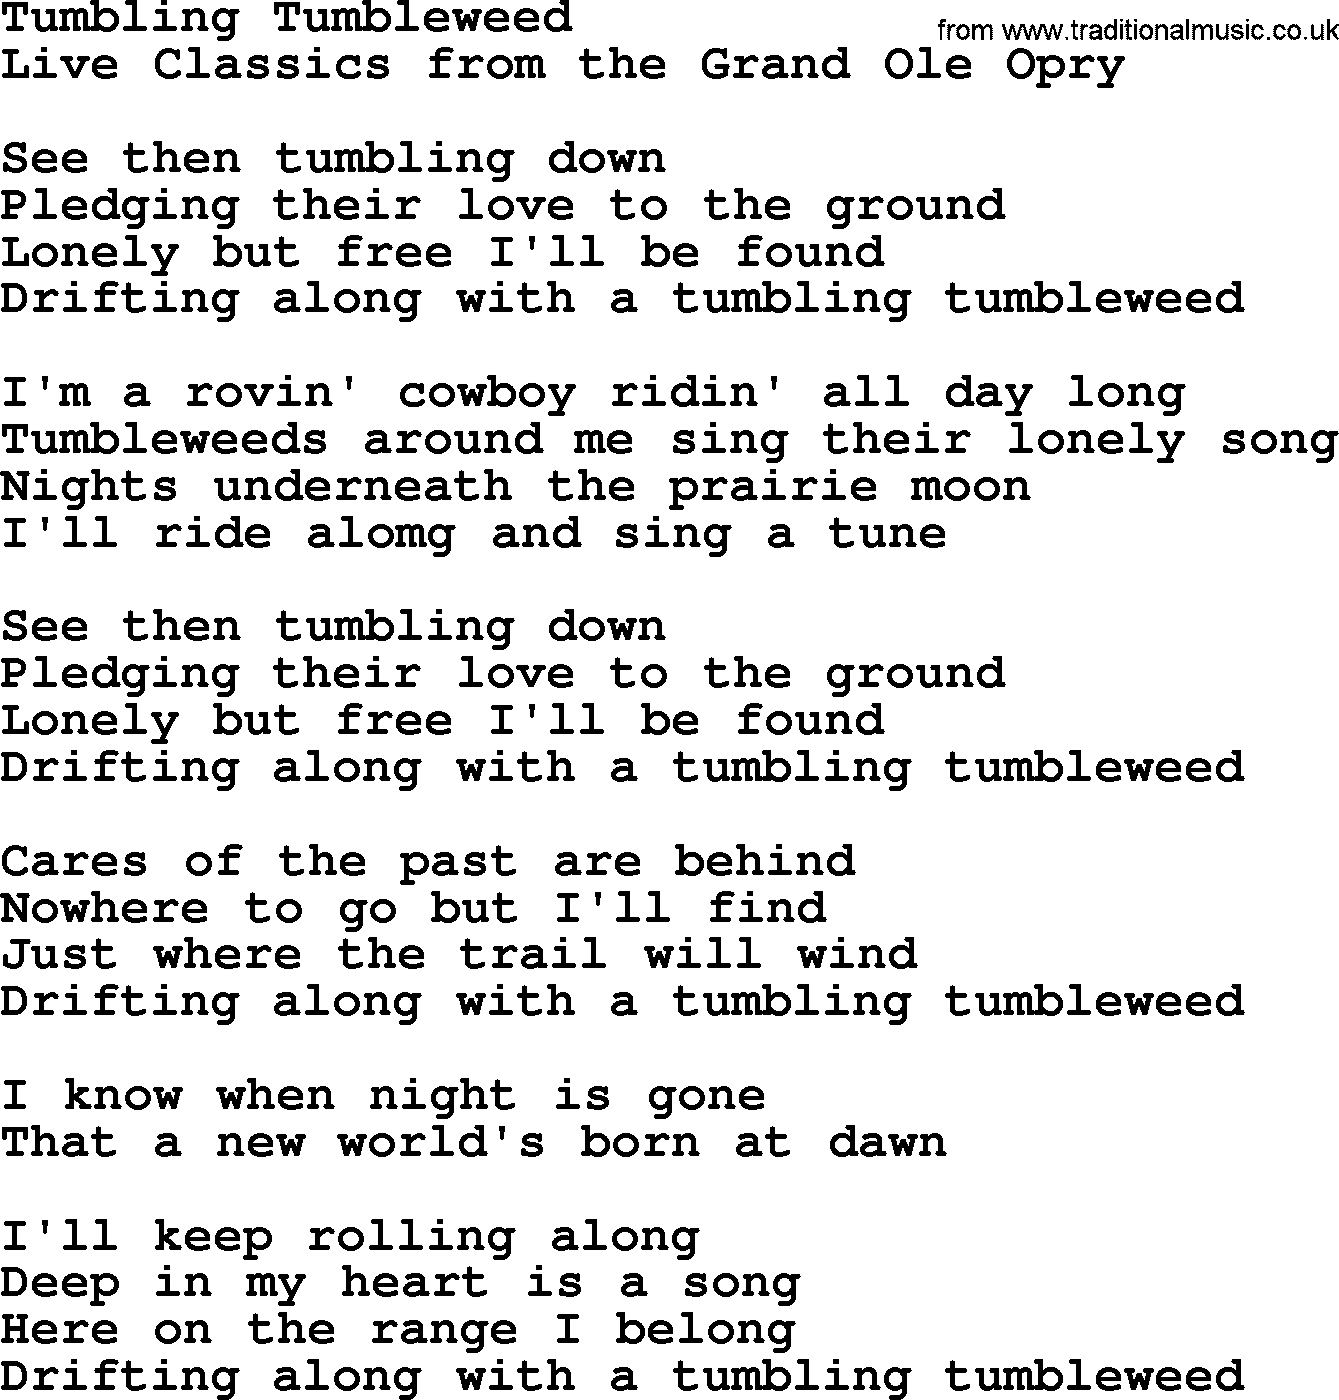 Marty Robbins song: Tumbling Tumbleweed, lyrics